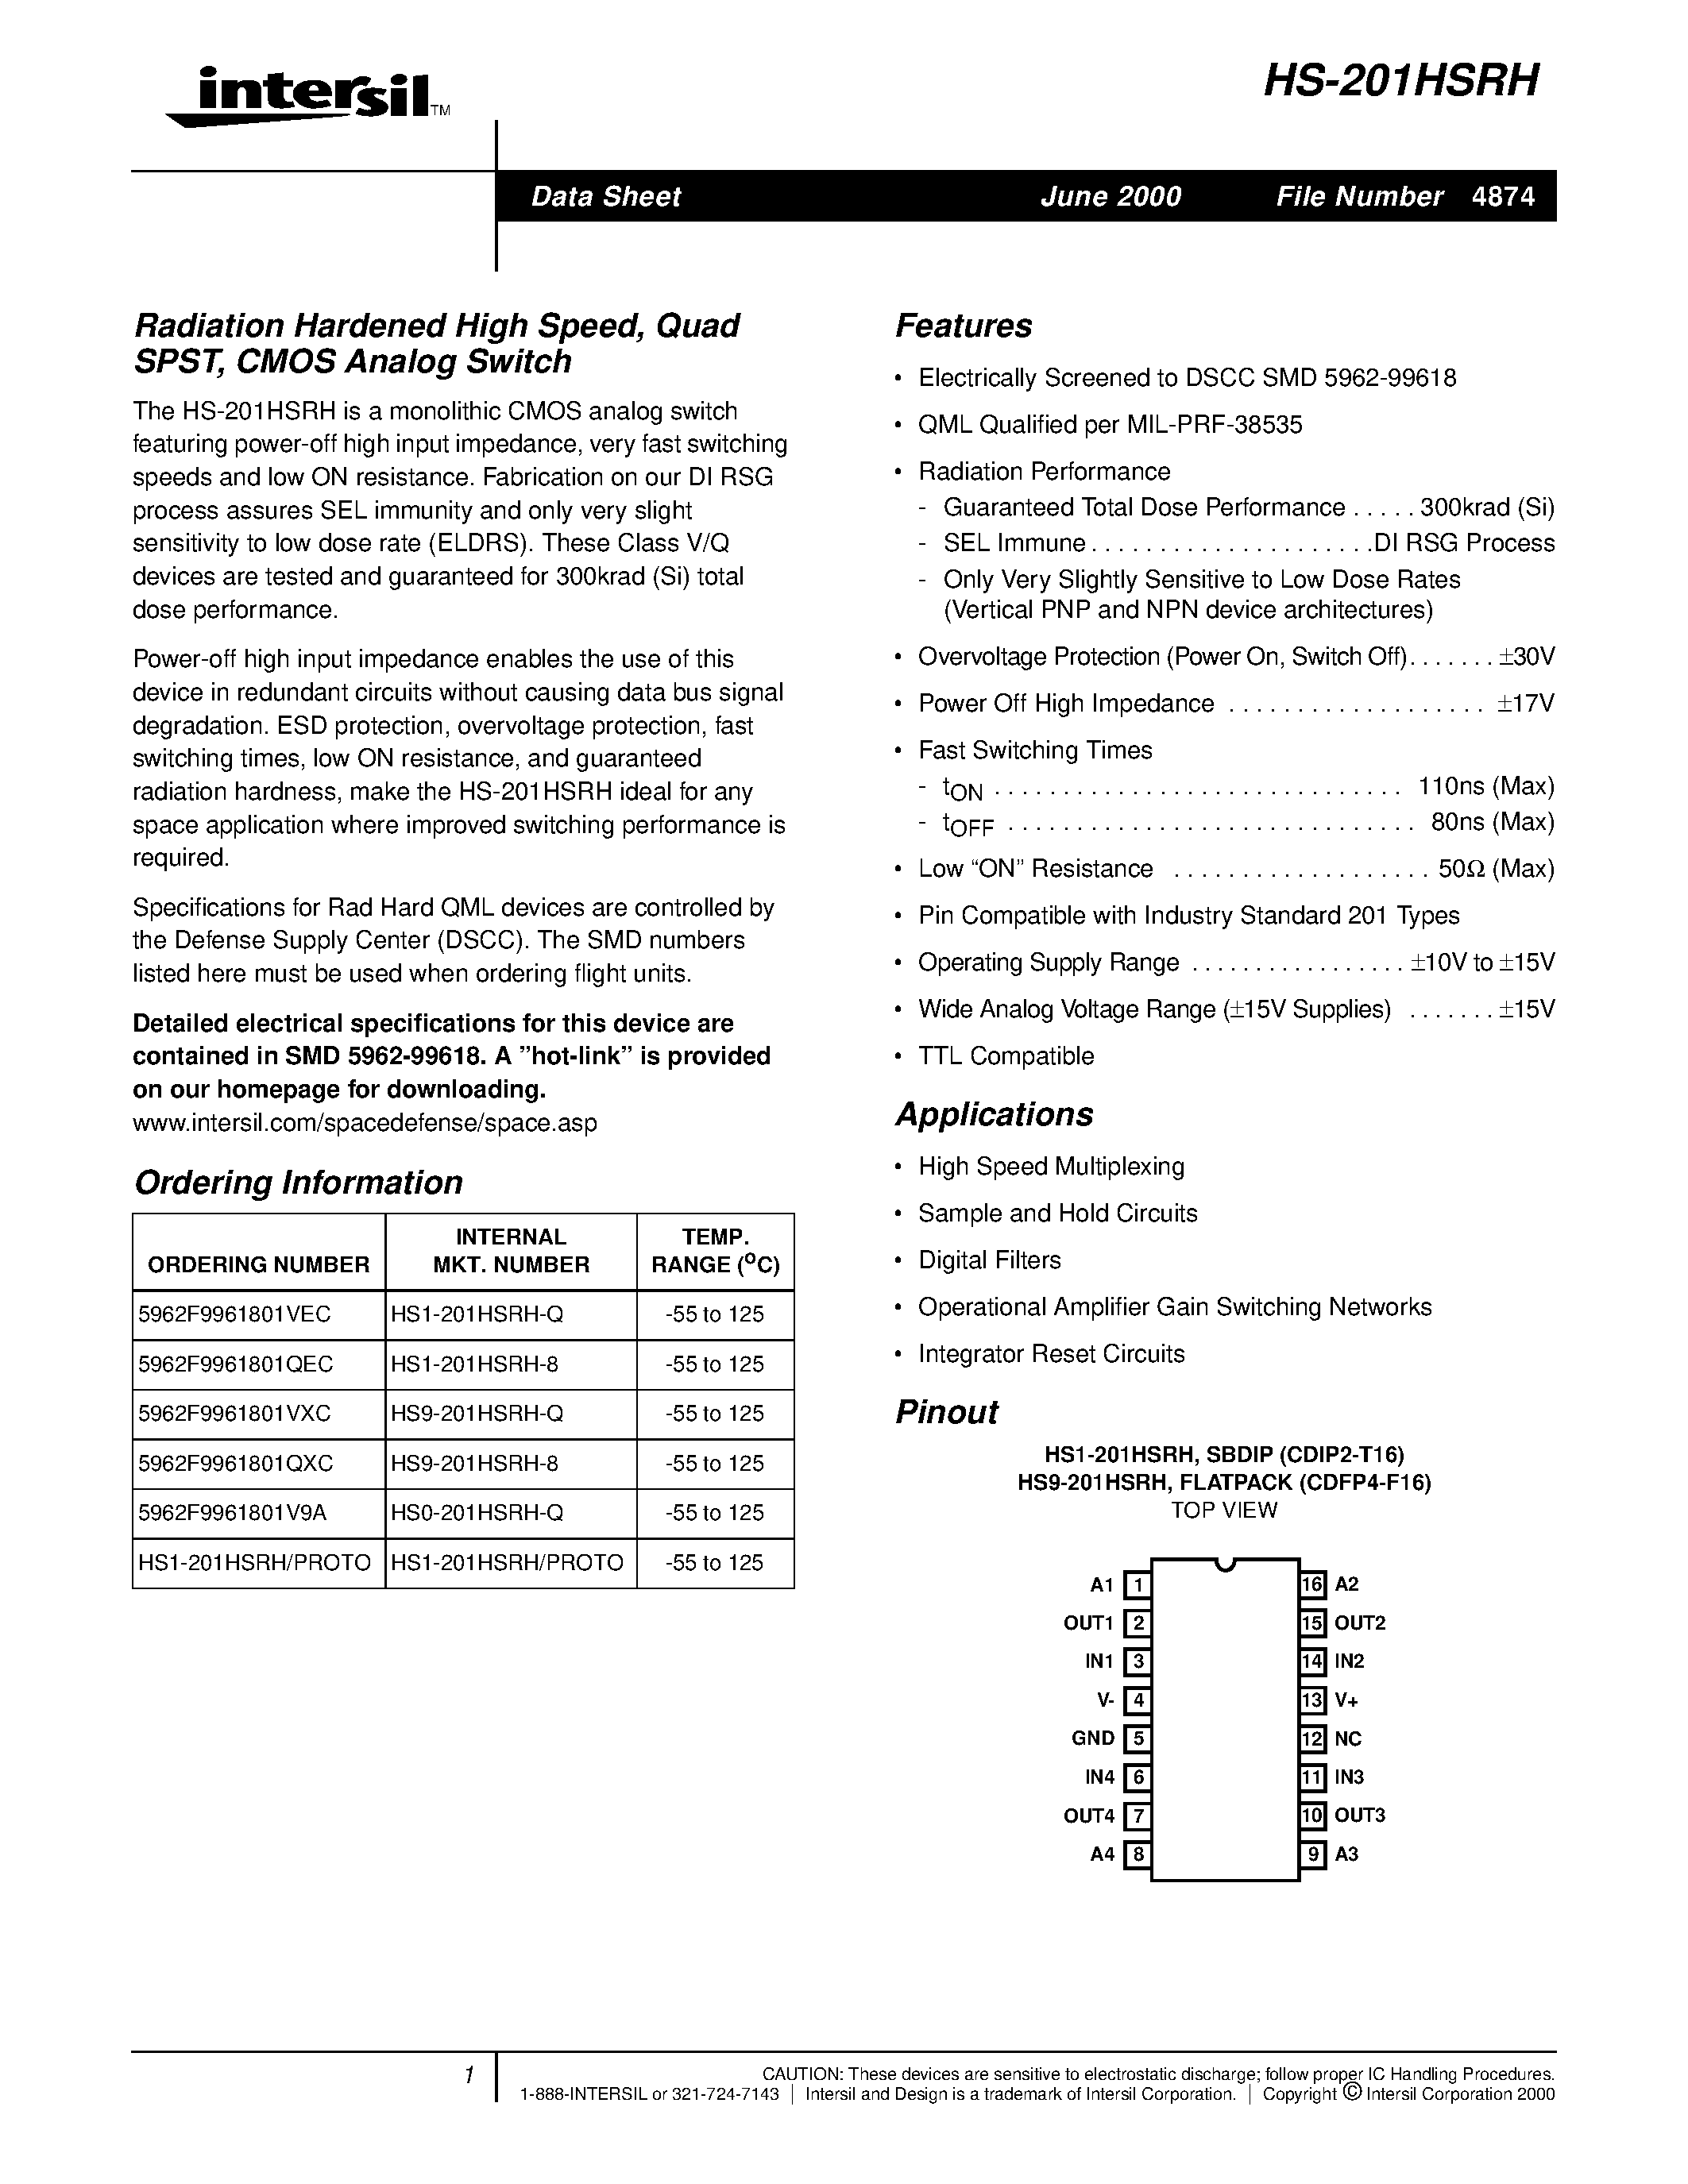 Datasheet HS1-201HSRH-Q - Radiation Hardened High Speed/ Quad SPST/ CMOS Analog Switch page 1